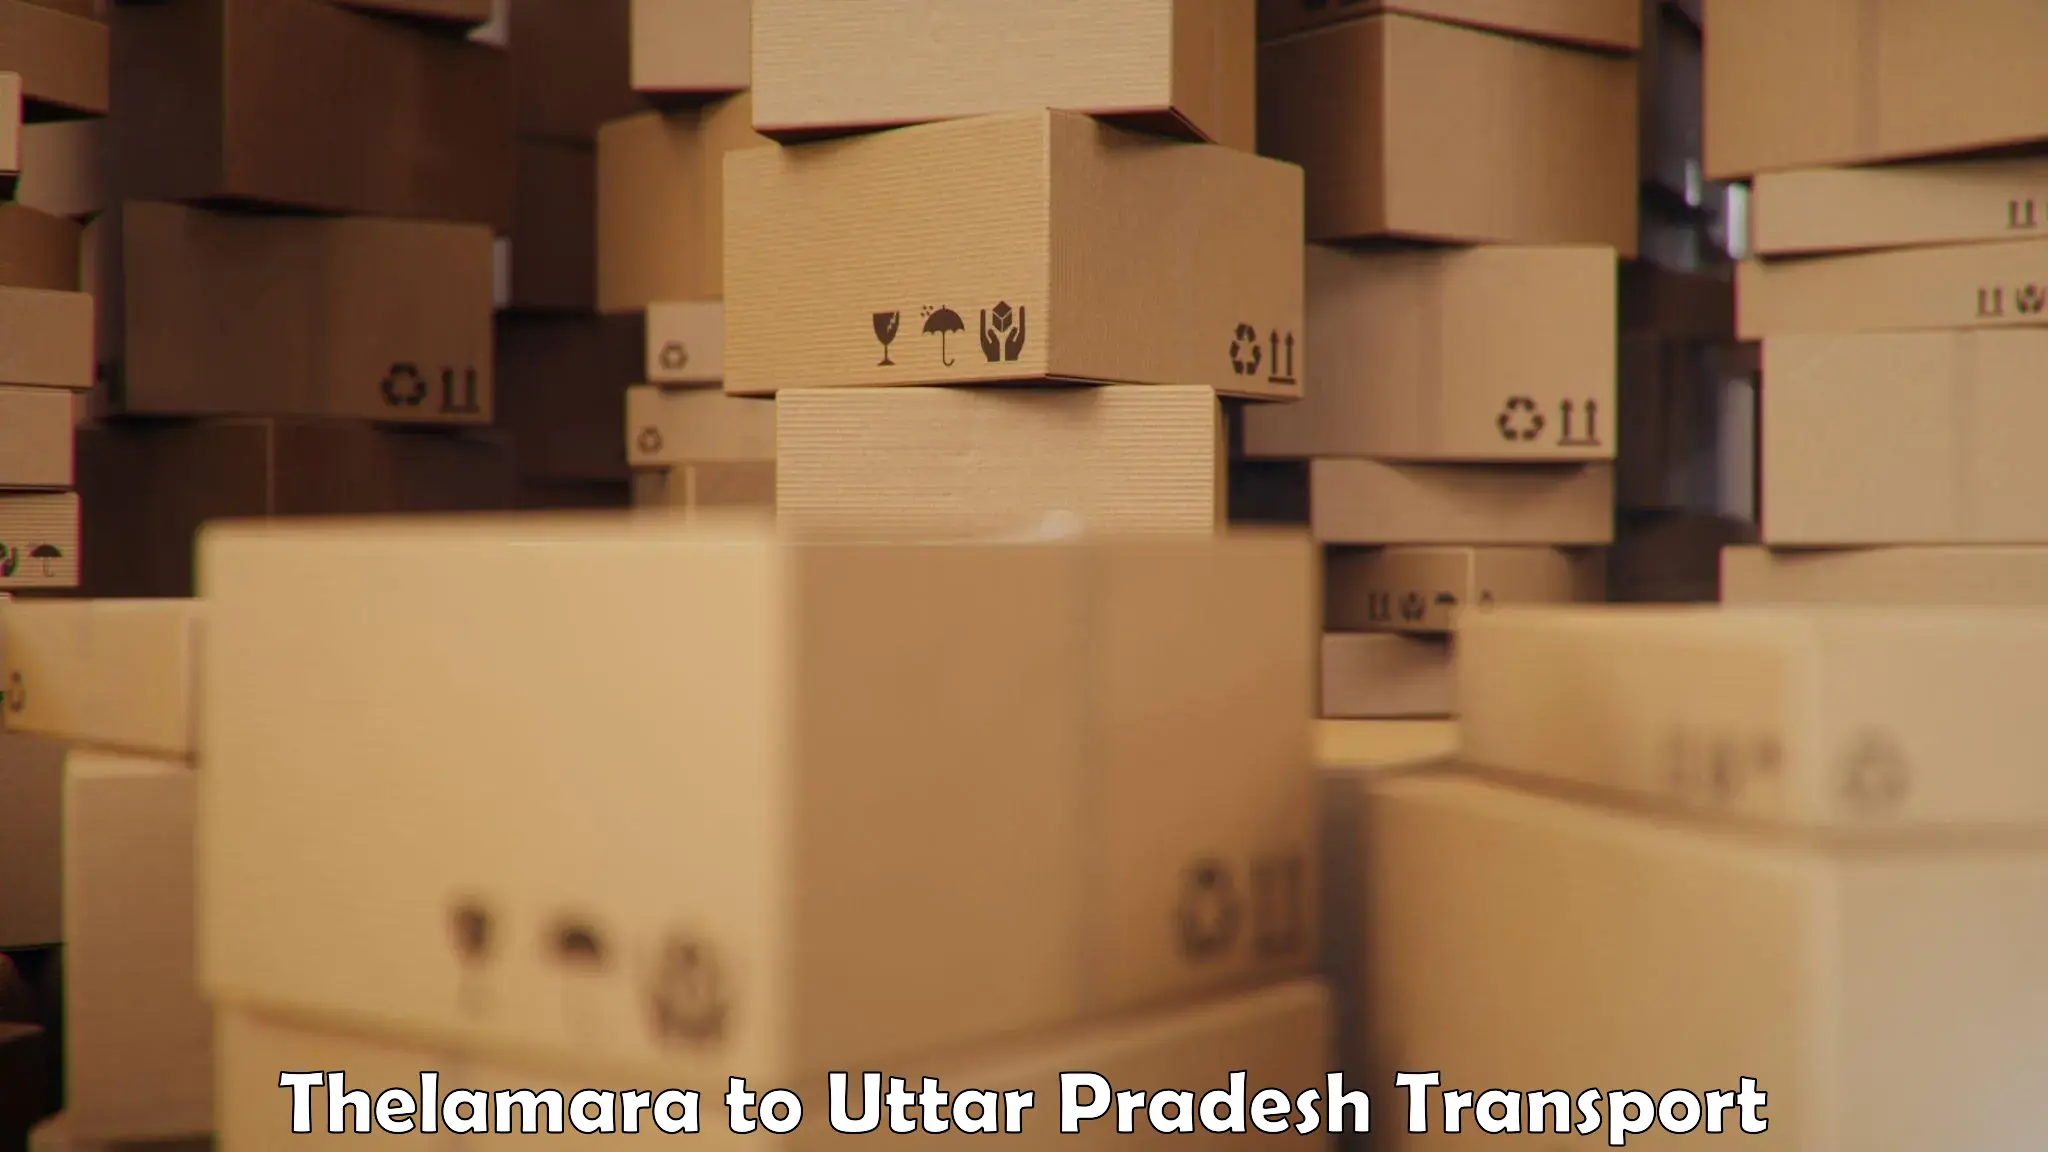 Transport in sharing in Thelamara to Uttar Pradesh